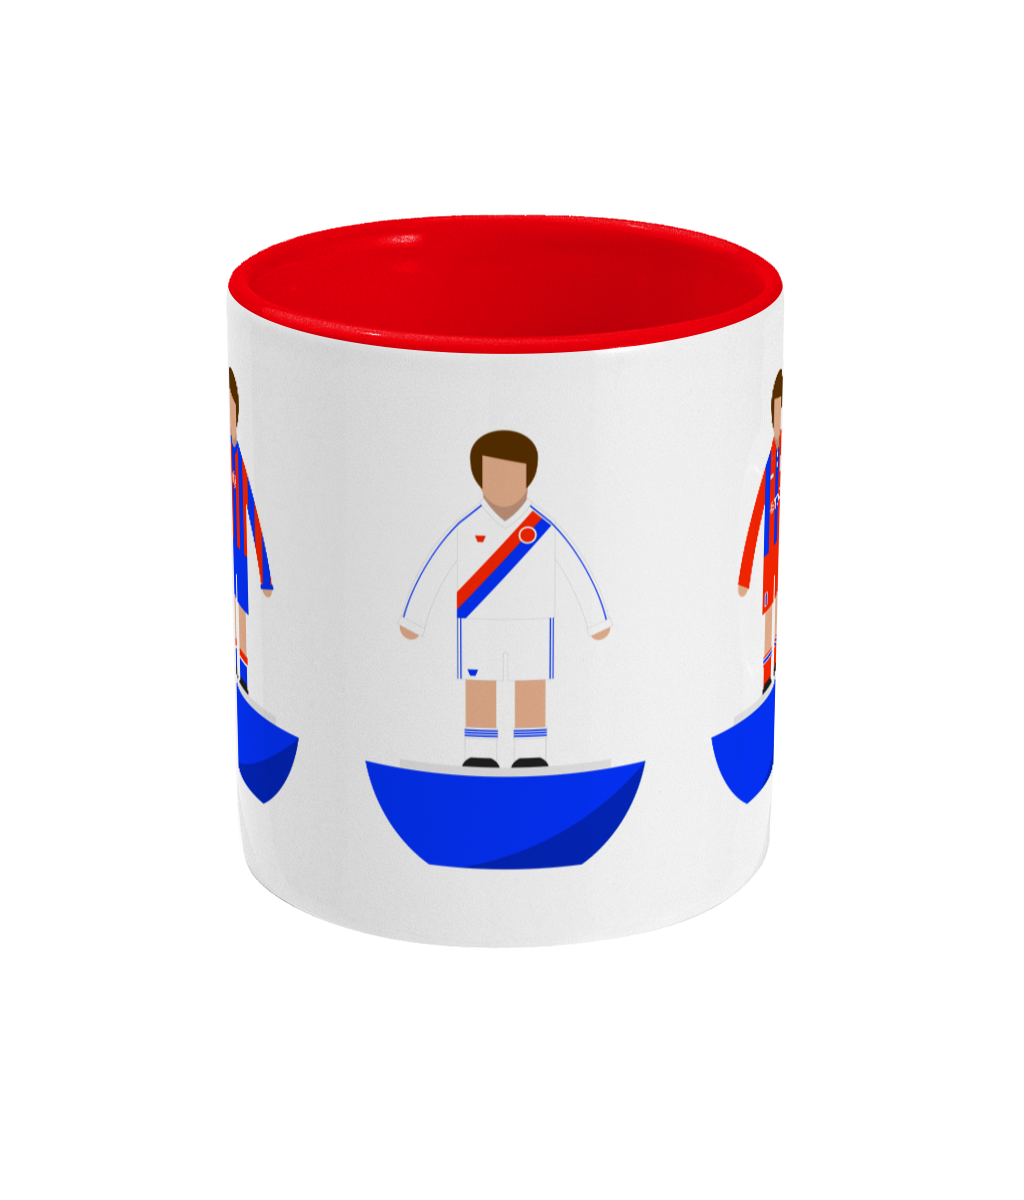 Football Kits 'Crystal Palace combined' Mug